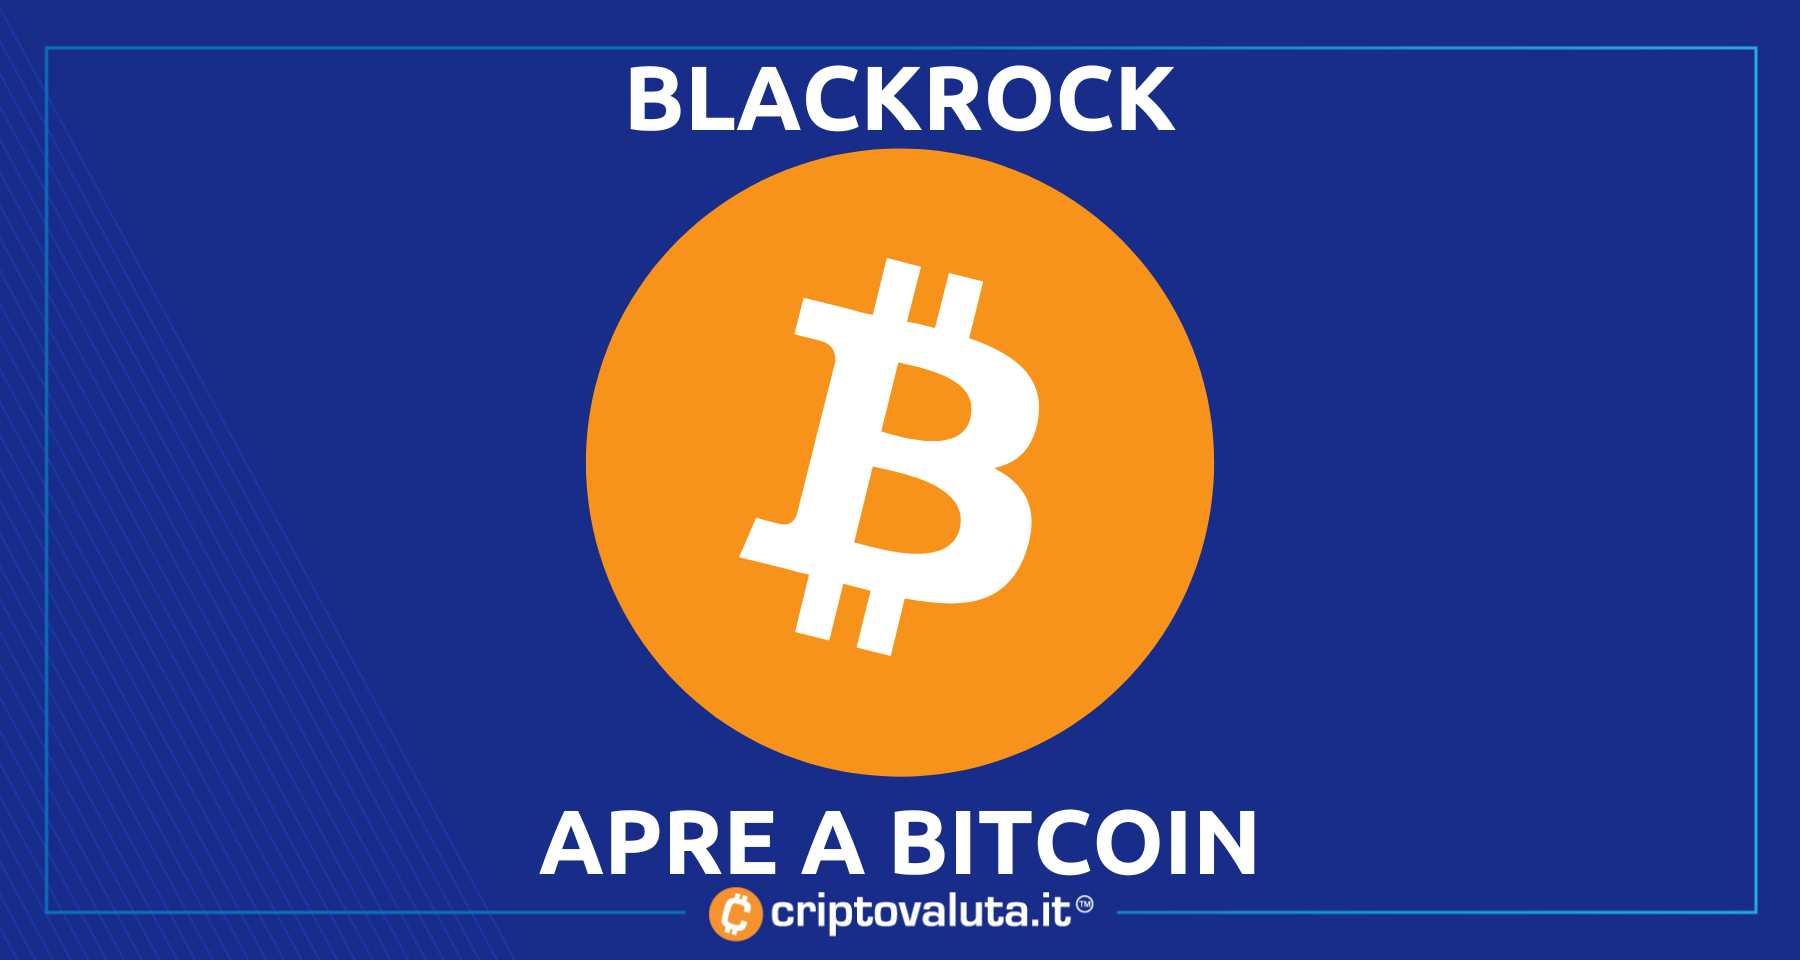 BlackRock apre a Bitcoin e Cripto | Arriva l’accordo con Coinbase